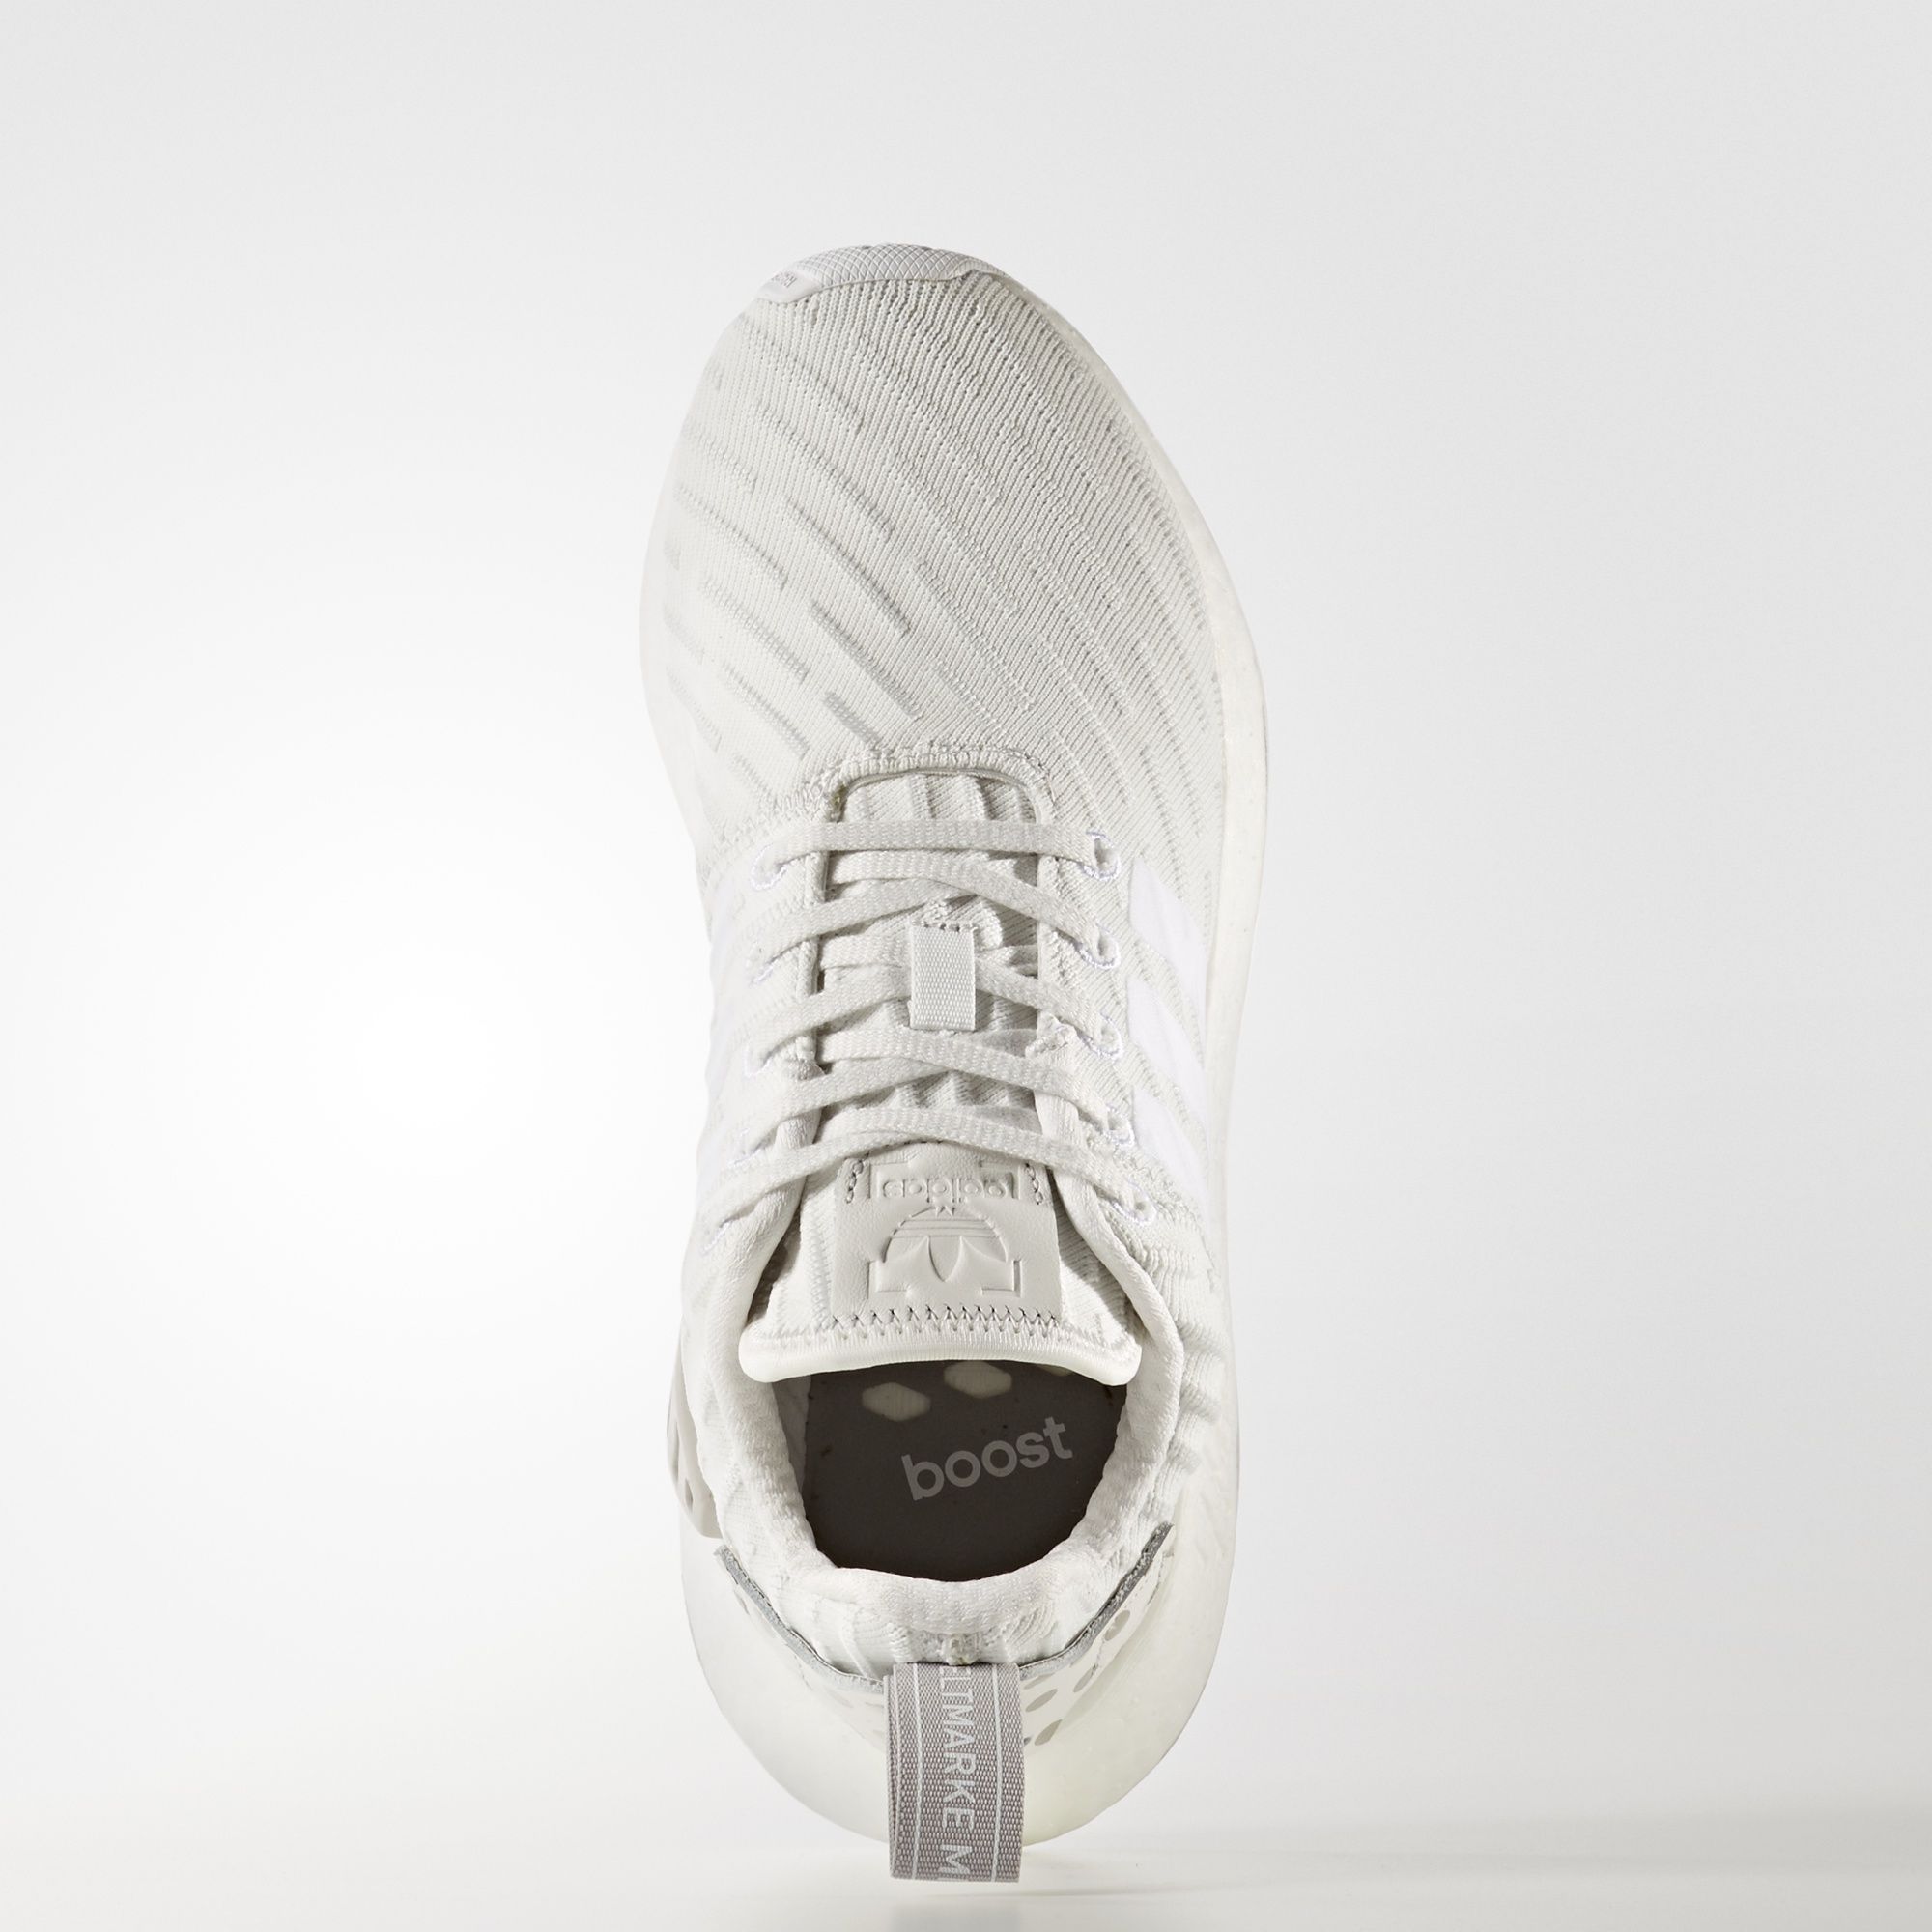 Adidas W NMD_R2
Clear Granite / White